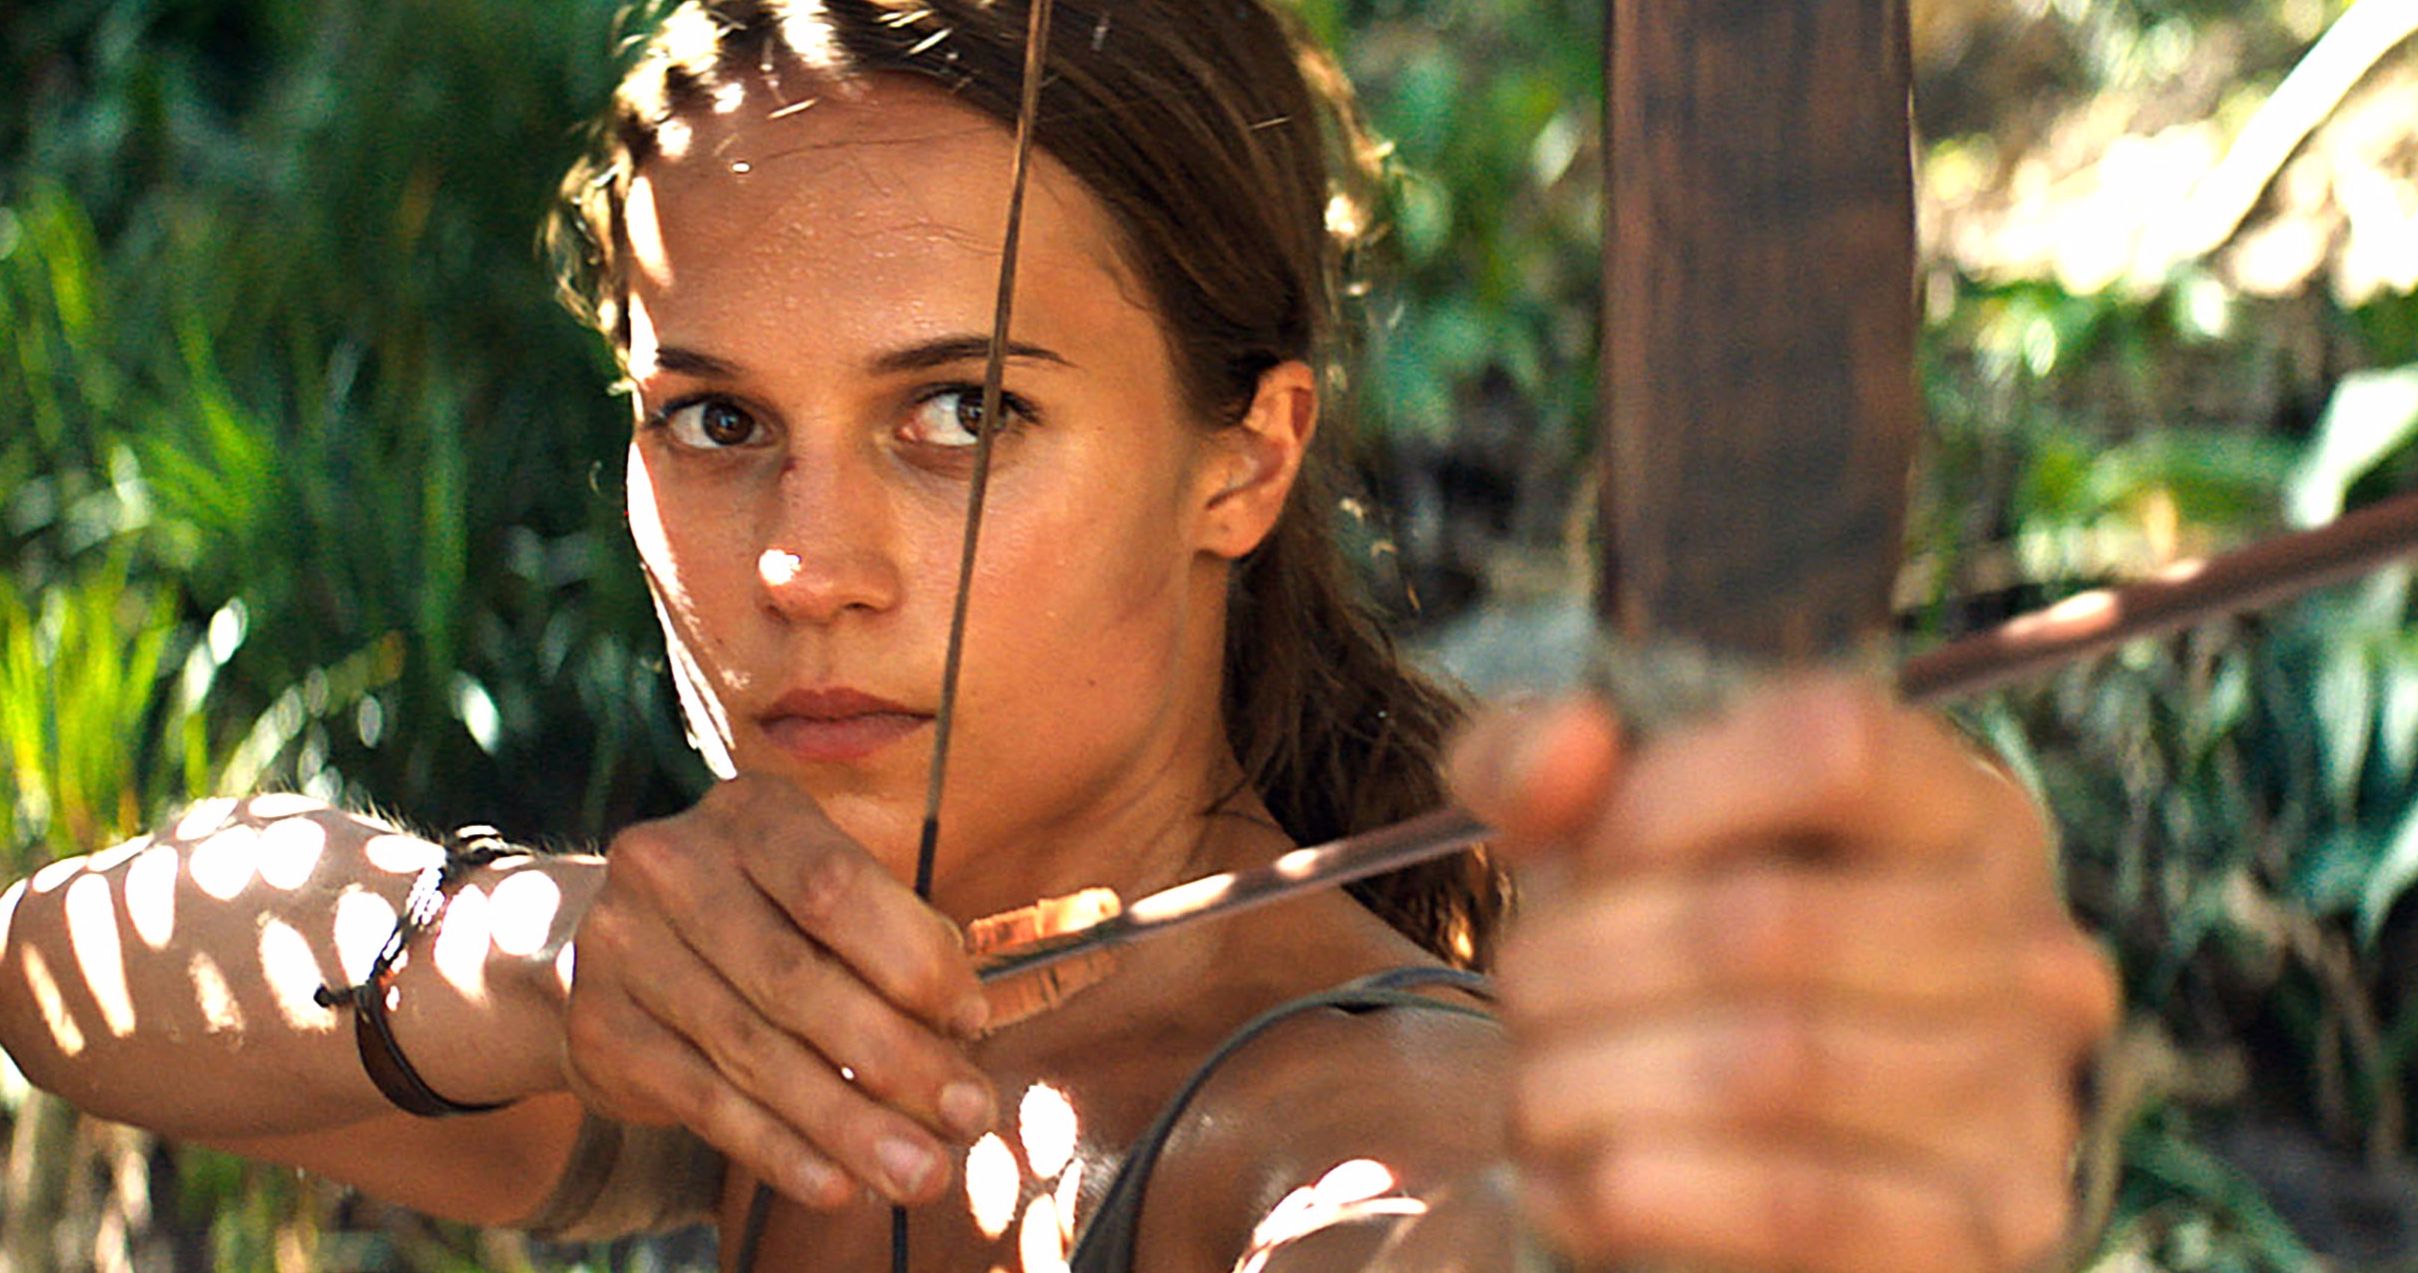 Tomb Raider 2 Coming in 2021, Alicia Vikander Returns as Lara Croft